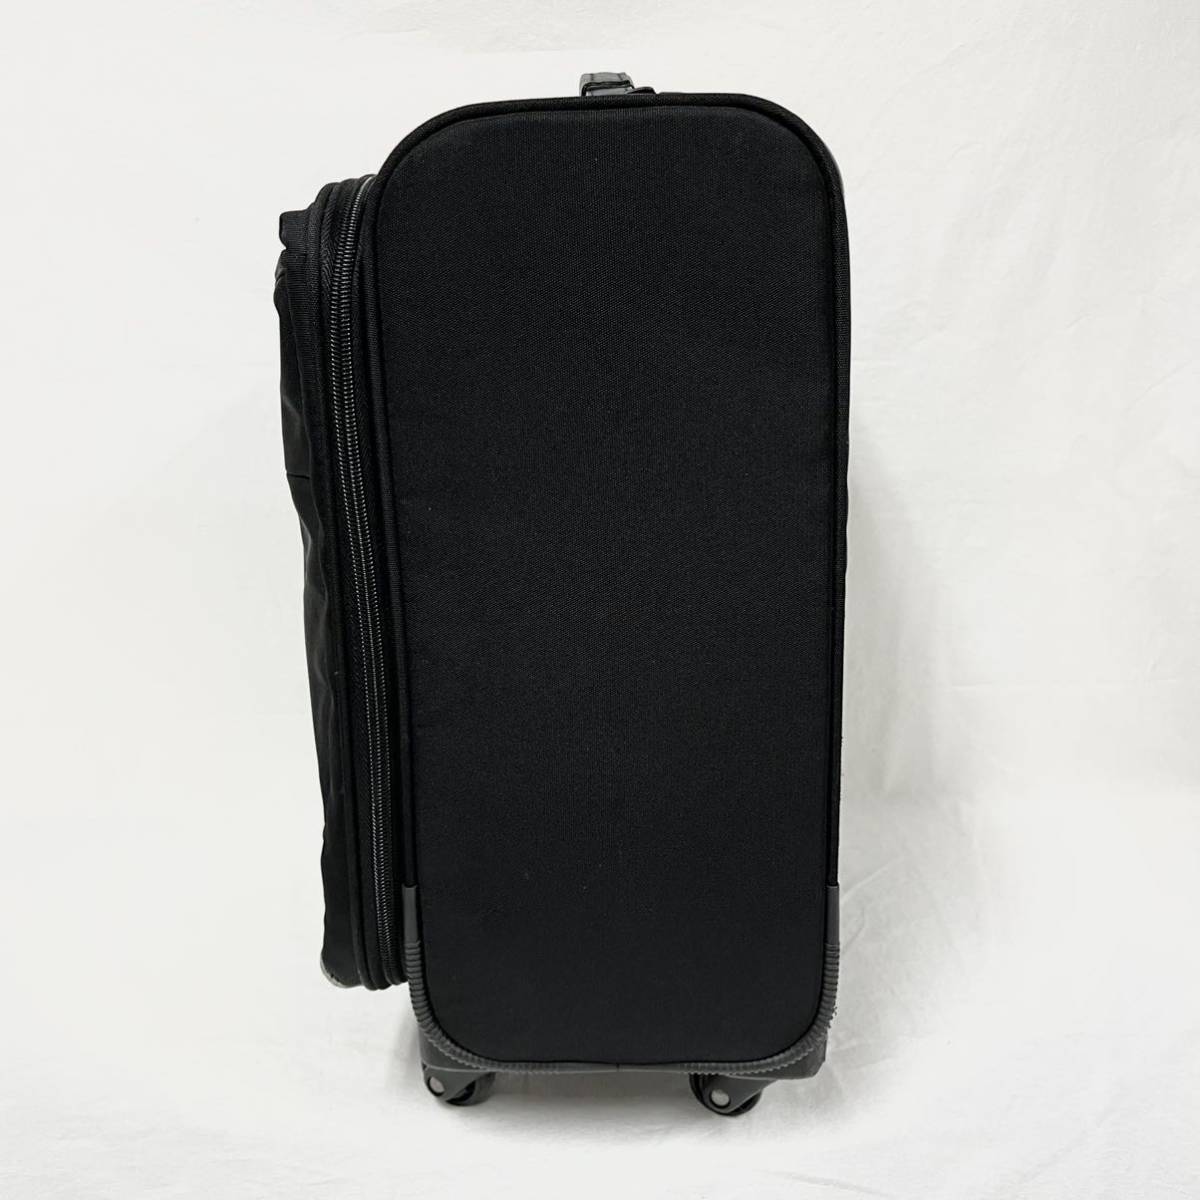 Samsonite サムソナイト キャリーバッグ スーツケース ブラック バッグ